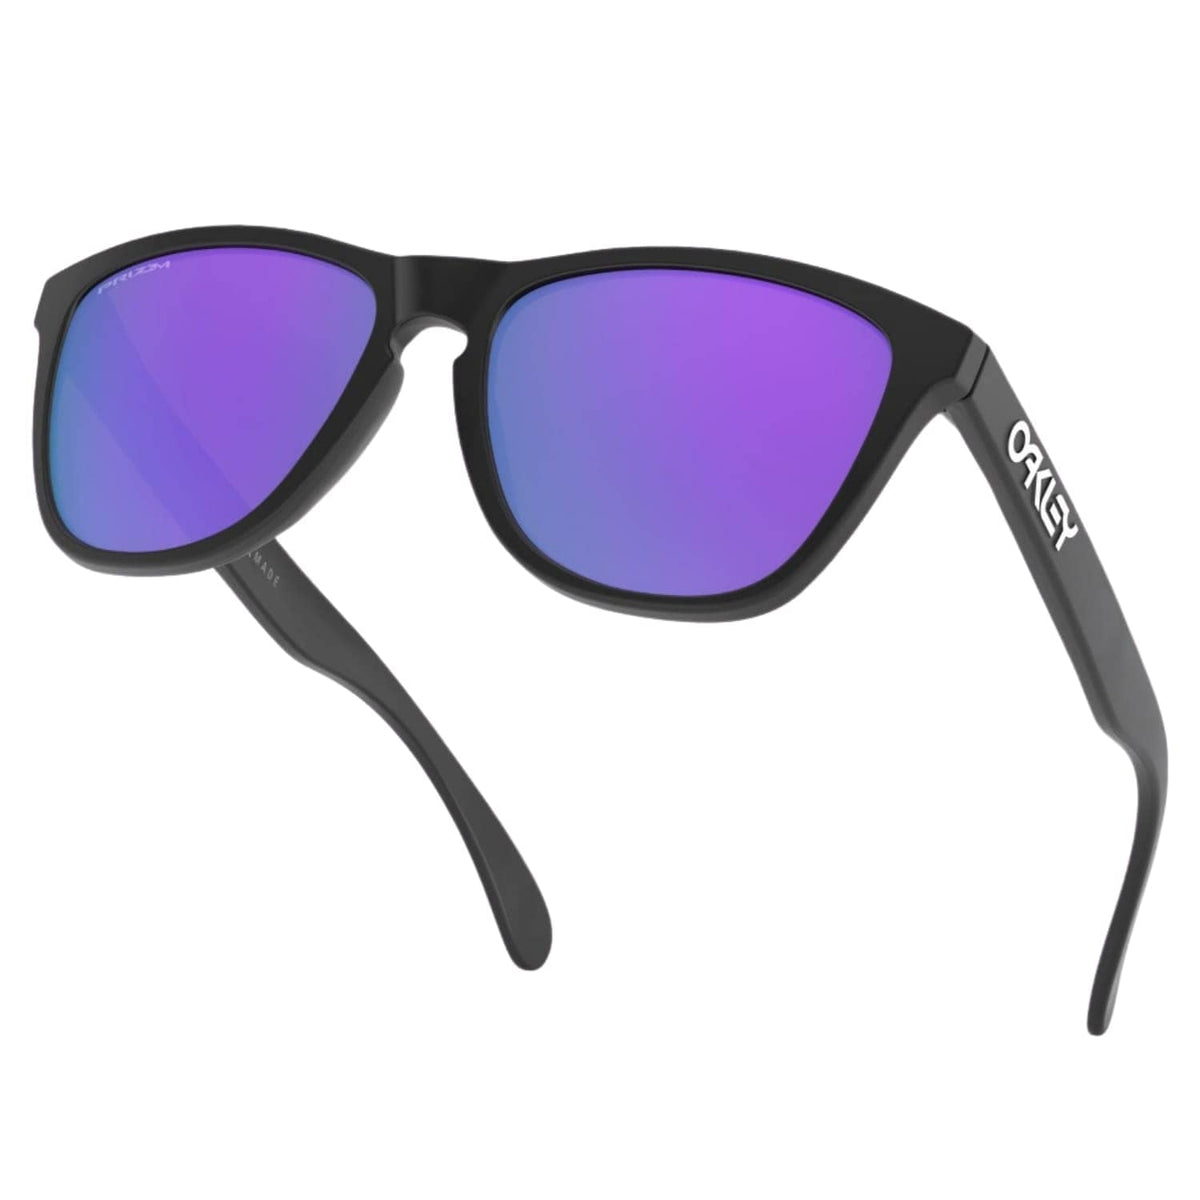 Oakley Frogskins Sunglasses Matte Black - Prizm Violet N/A - Round Sunglasses by Oakley